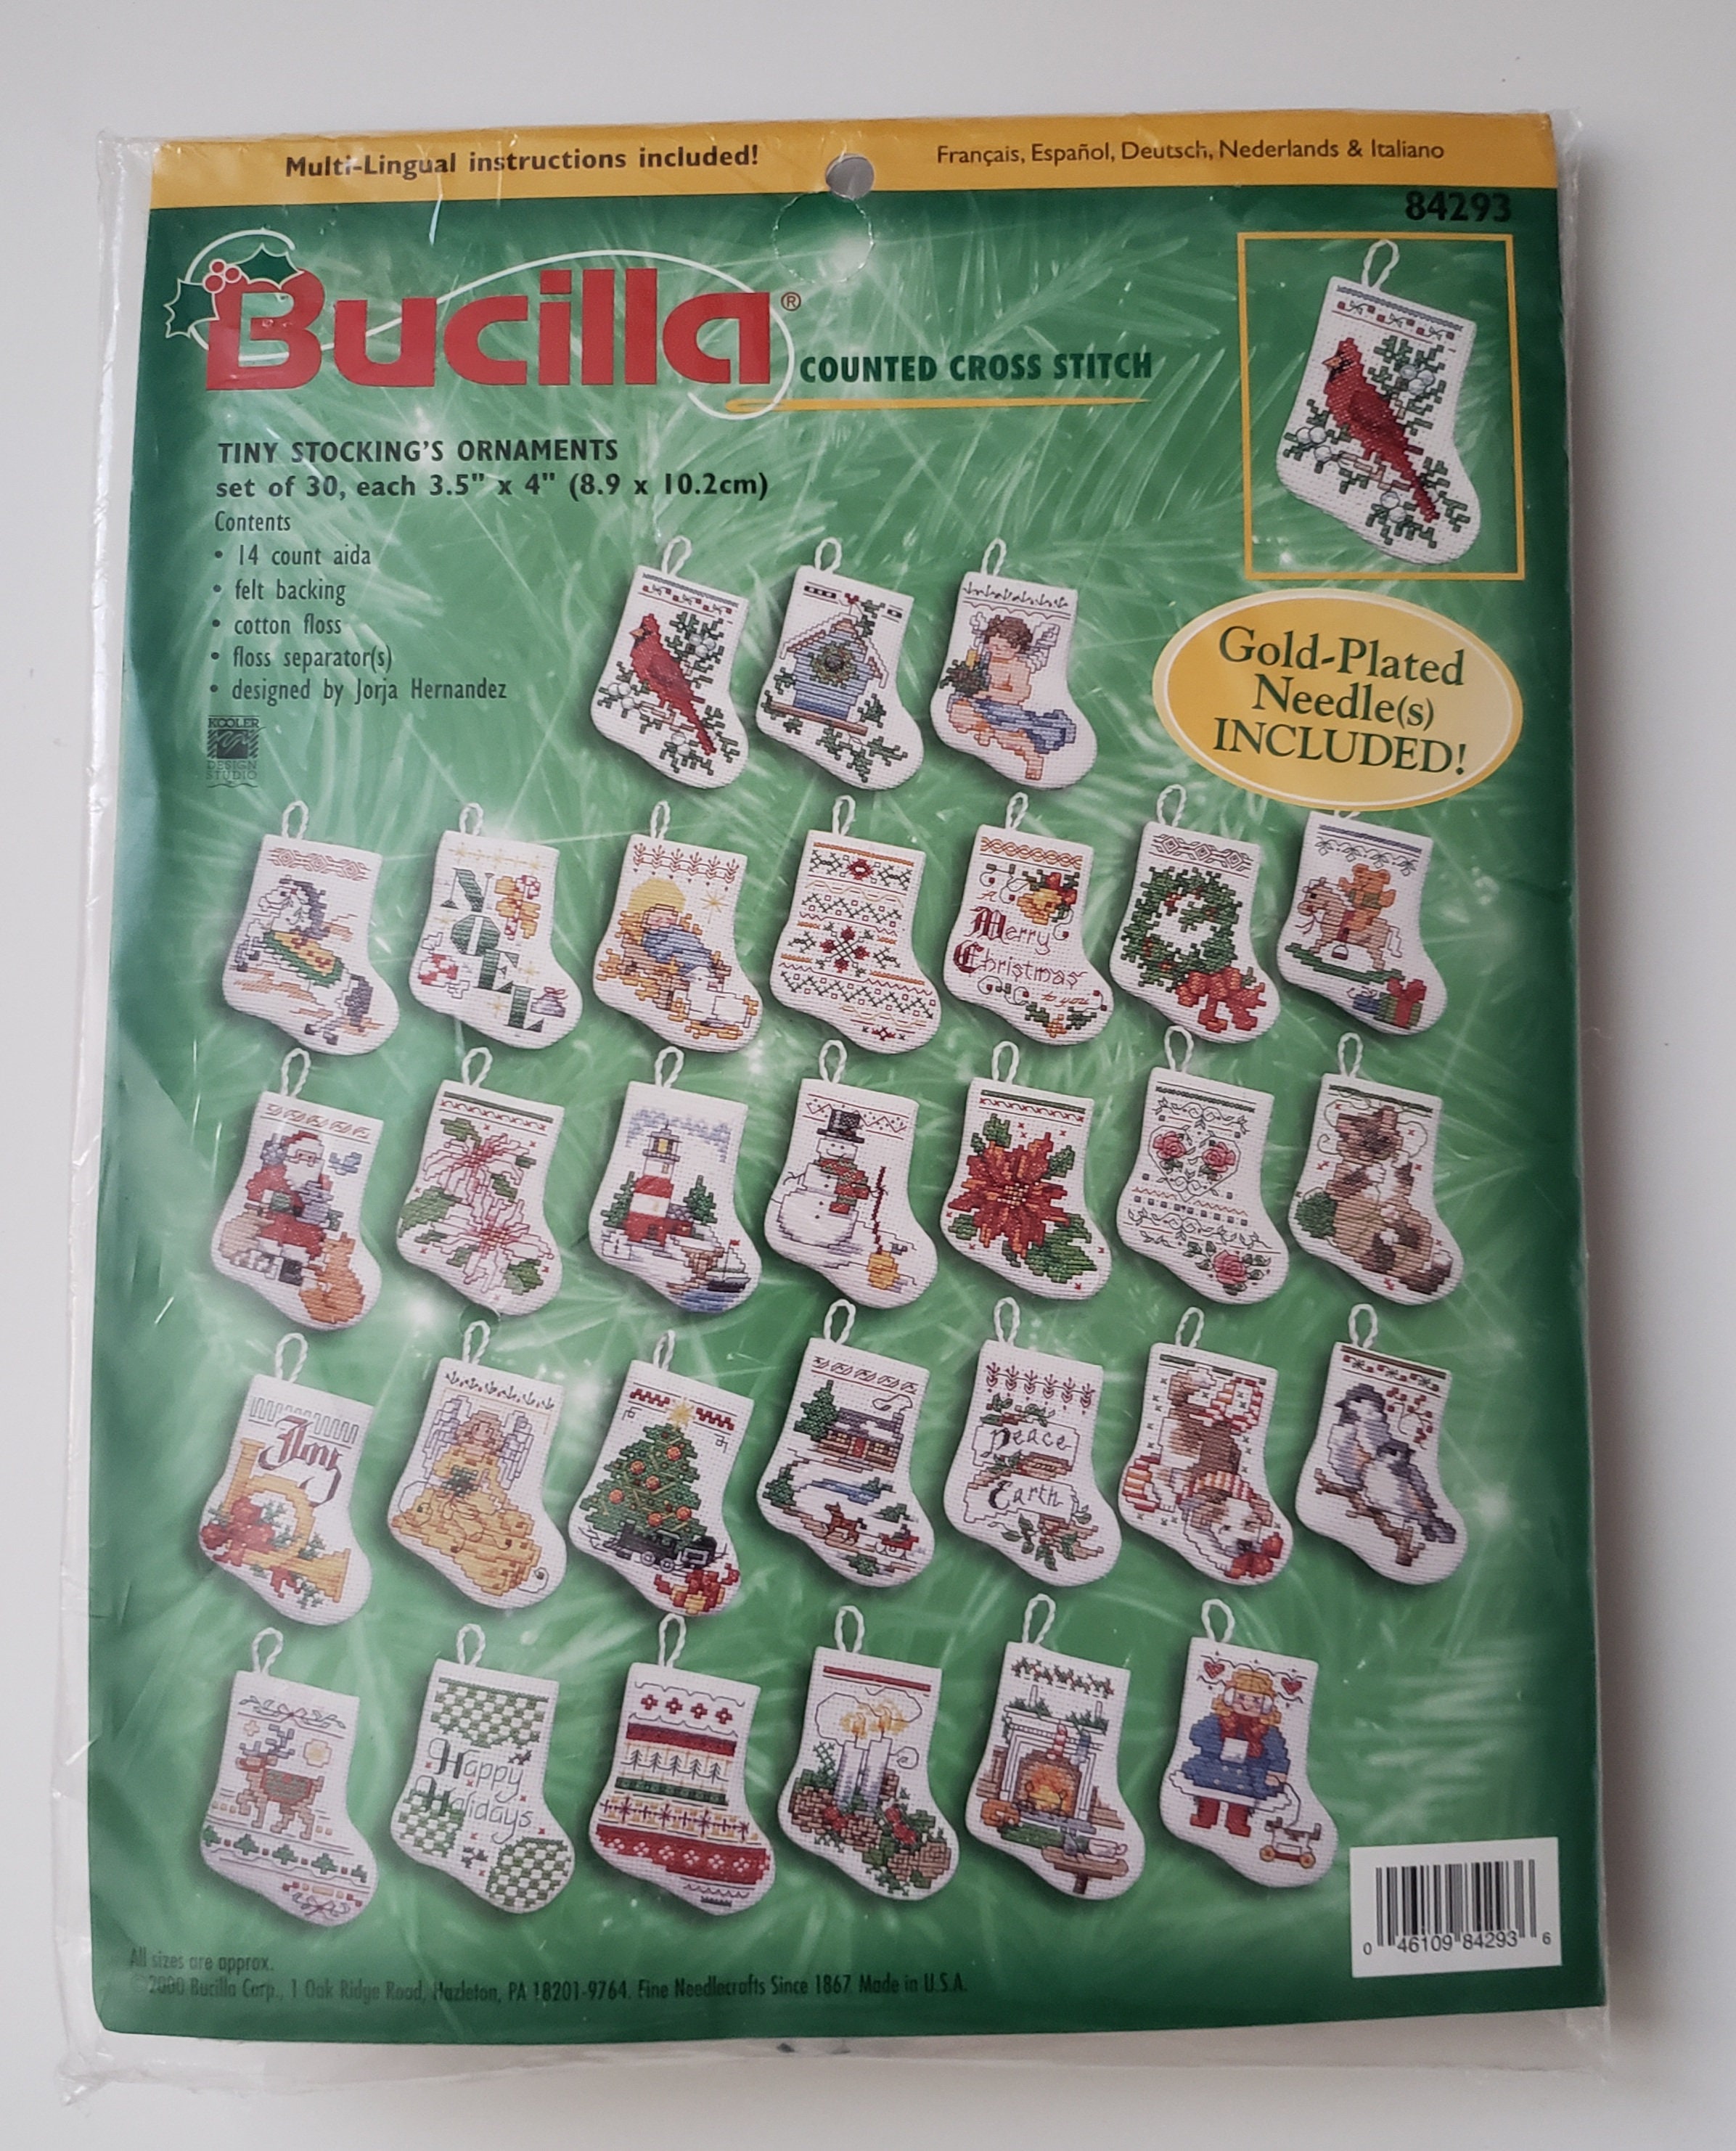 Shop Plaid Bucilla ® Seasonal - Counted Cross Stitch - Ornament Kits - Tiny  Stockings - 84293 - 84293